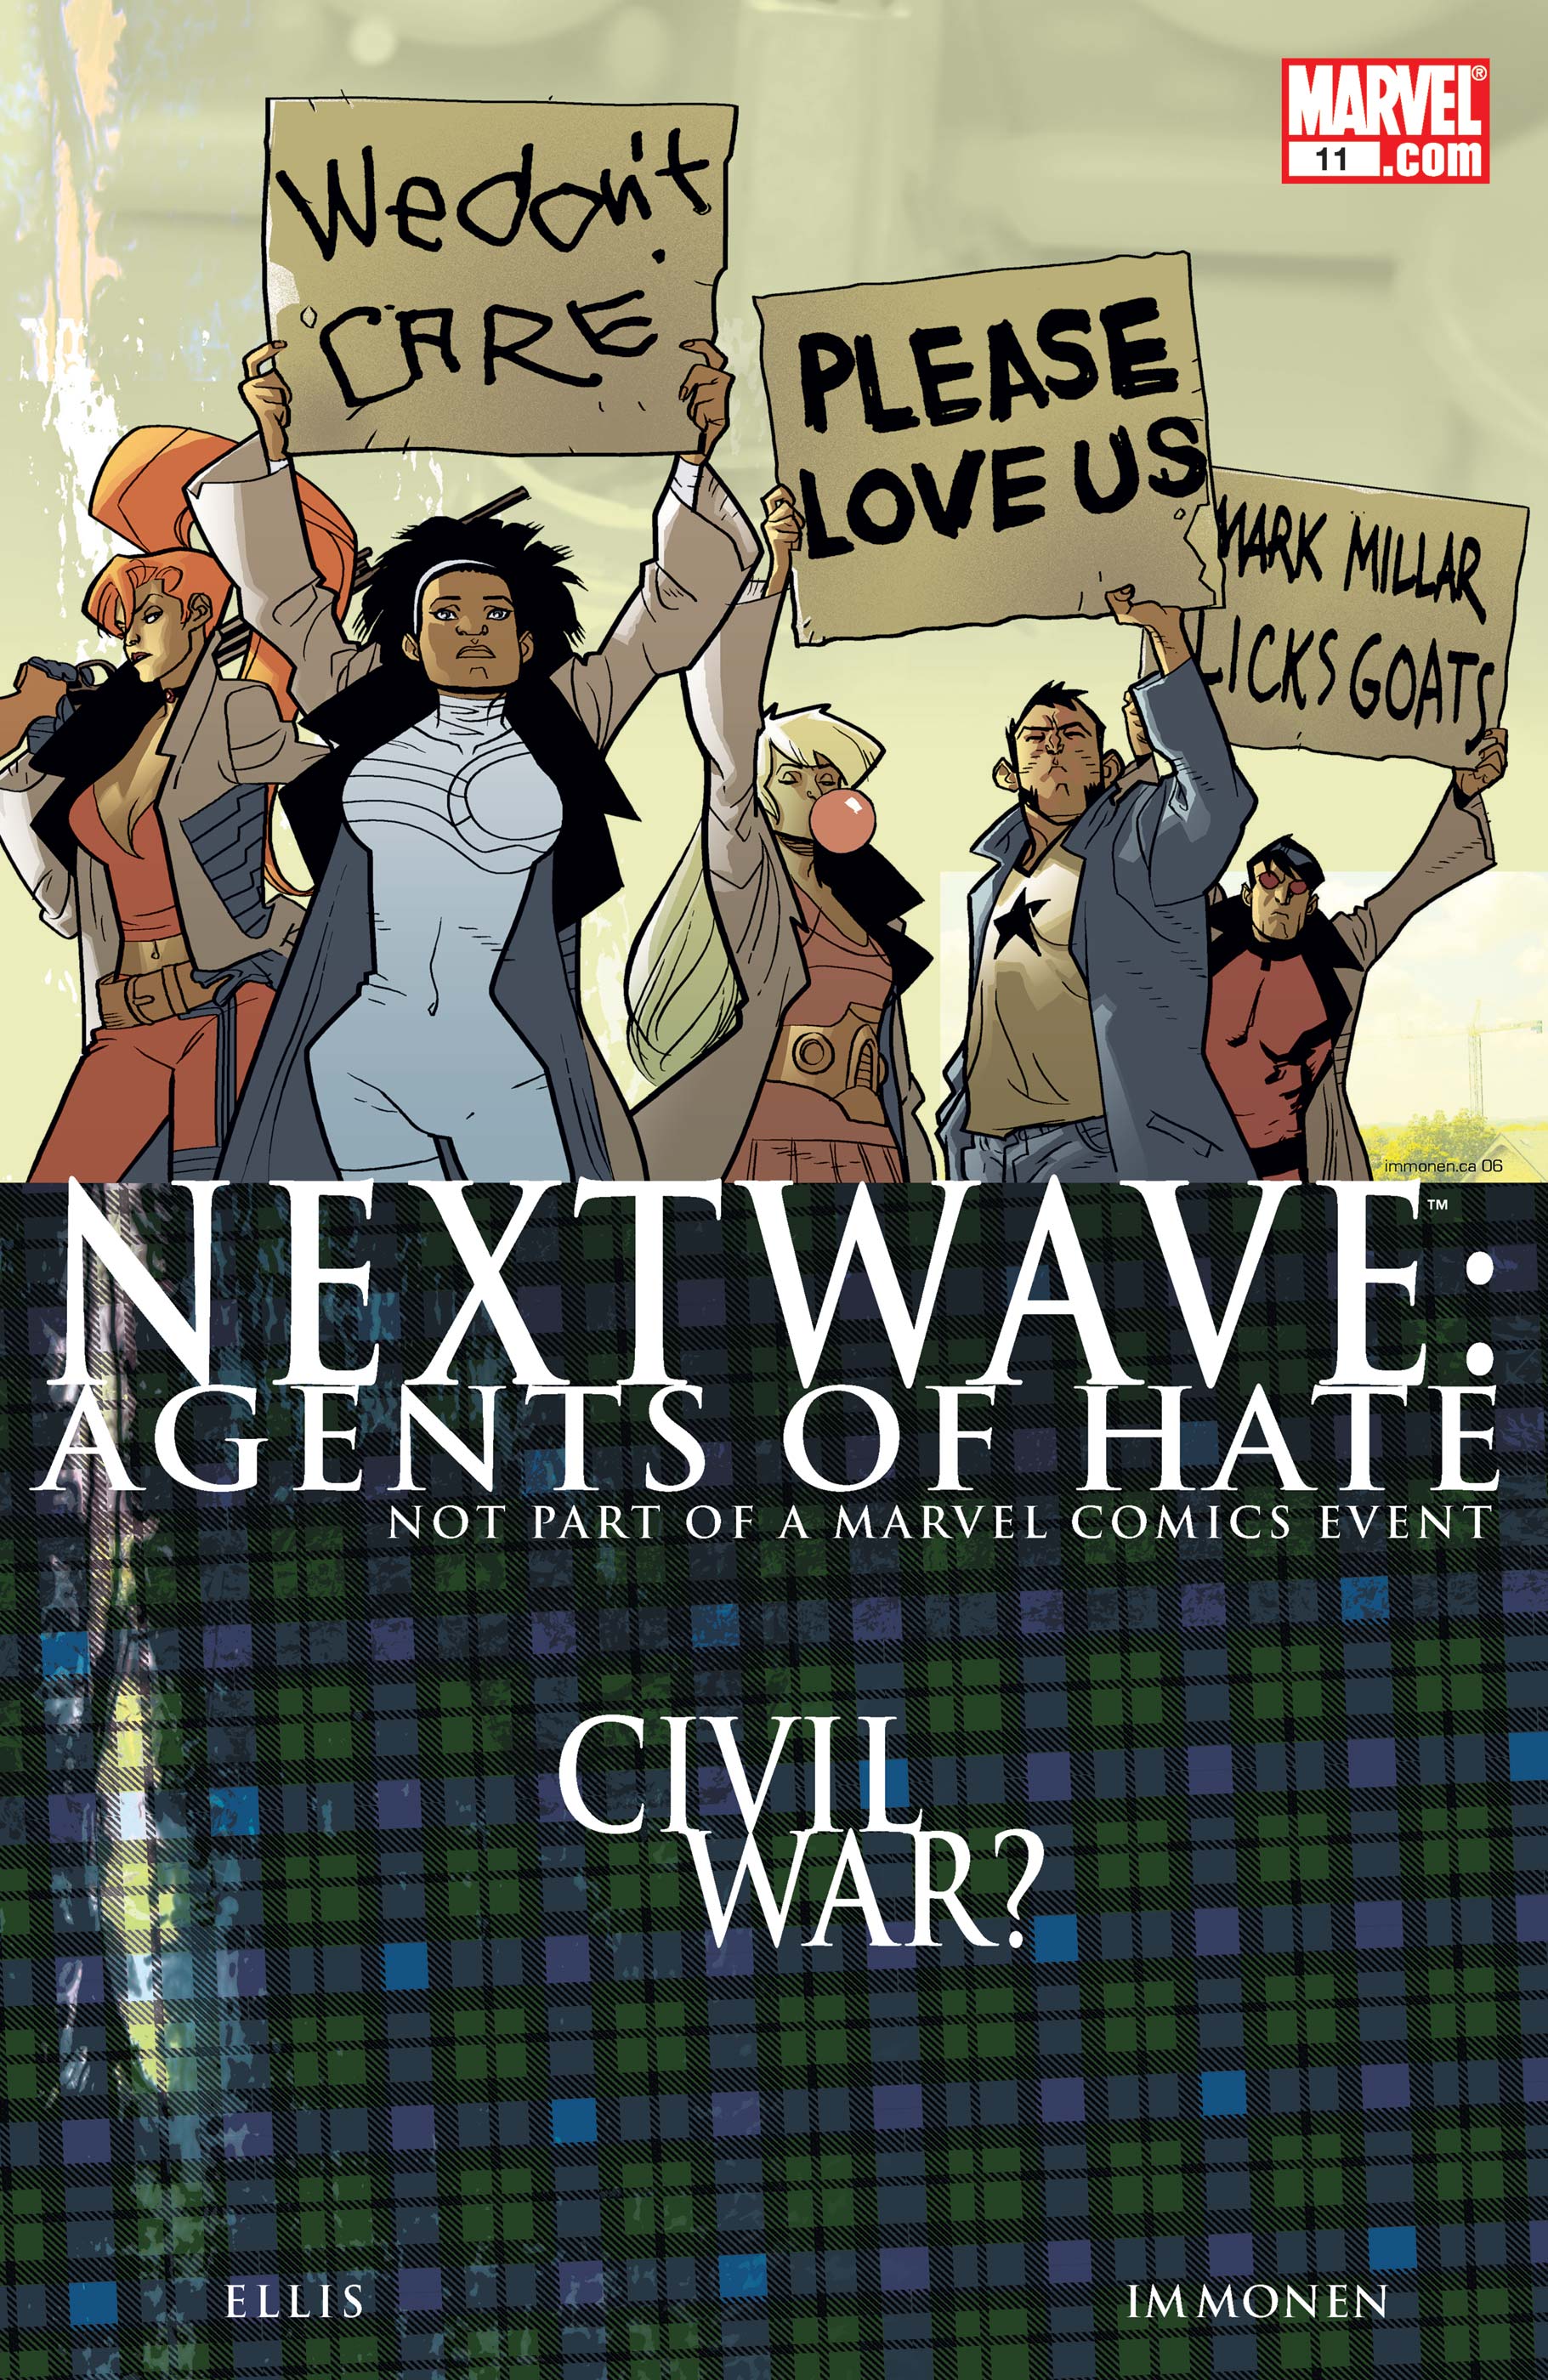 Nextwave agents of hate